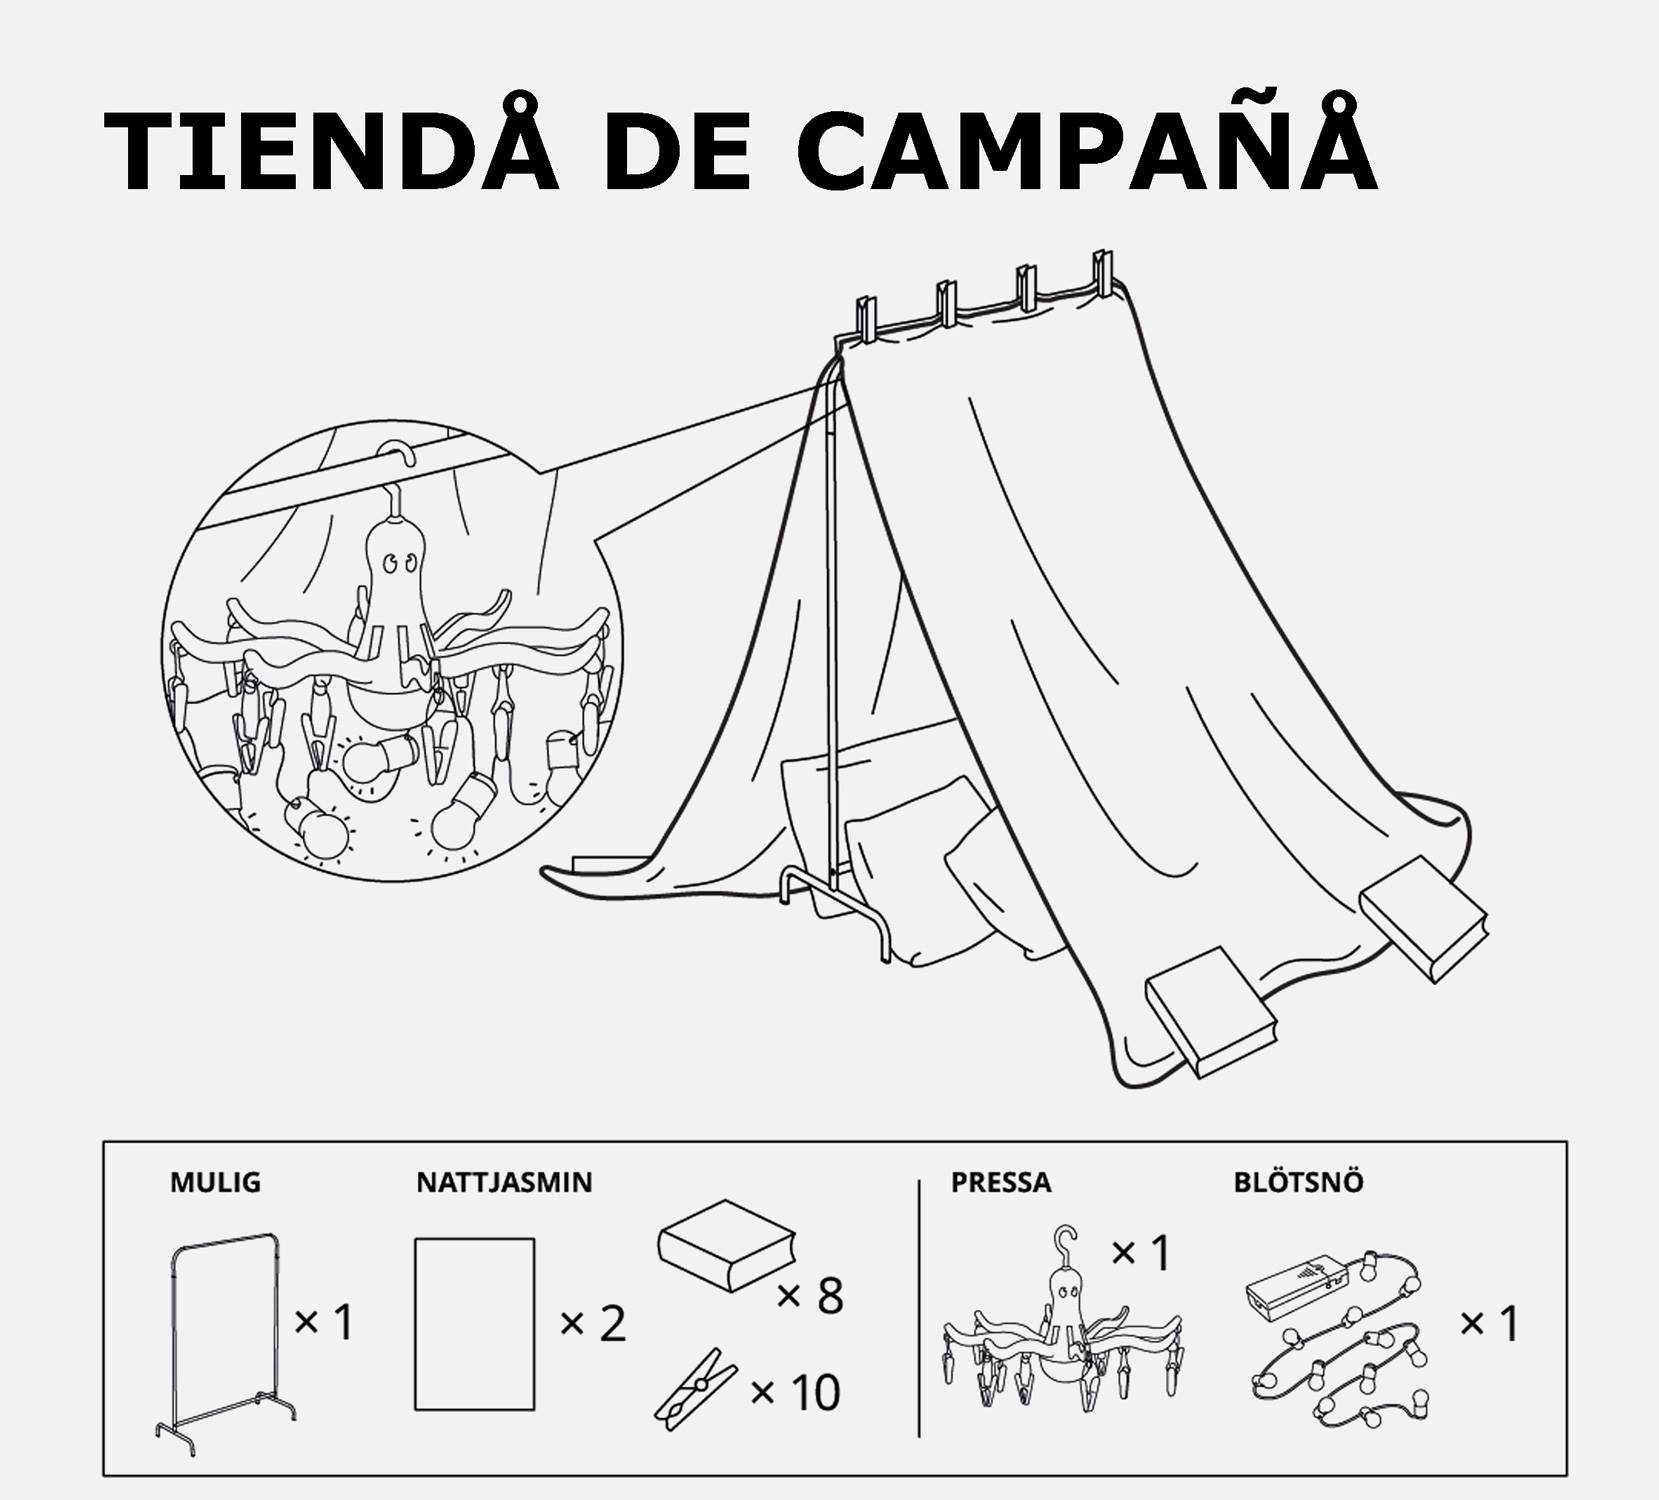 Ikea-tienda-campaña-confinamiento-coronavirus